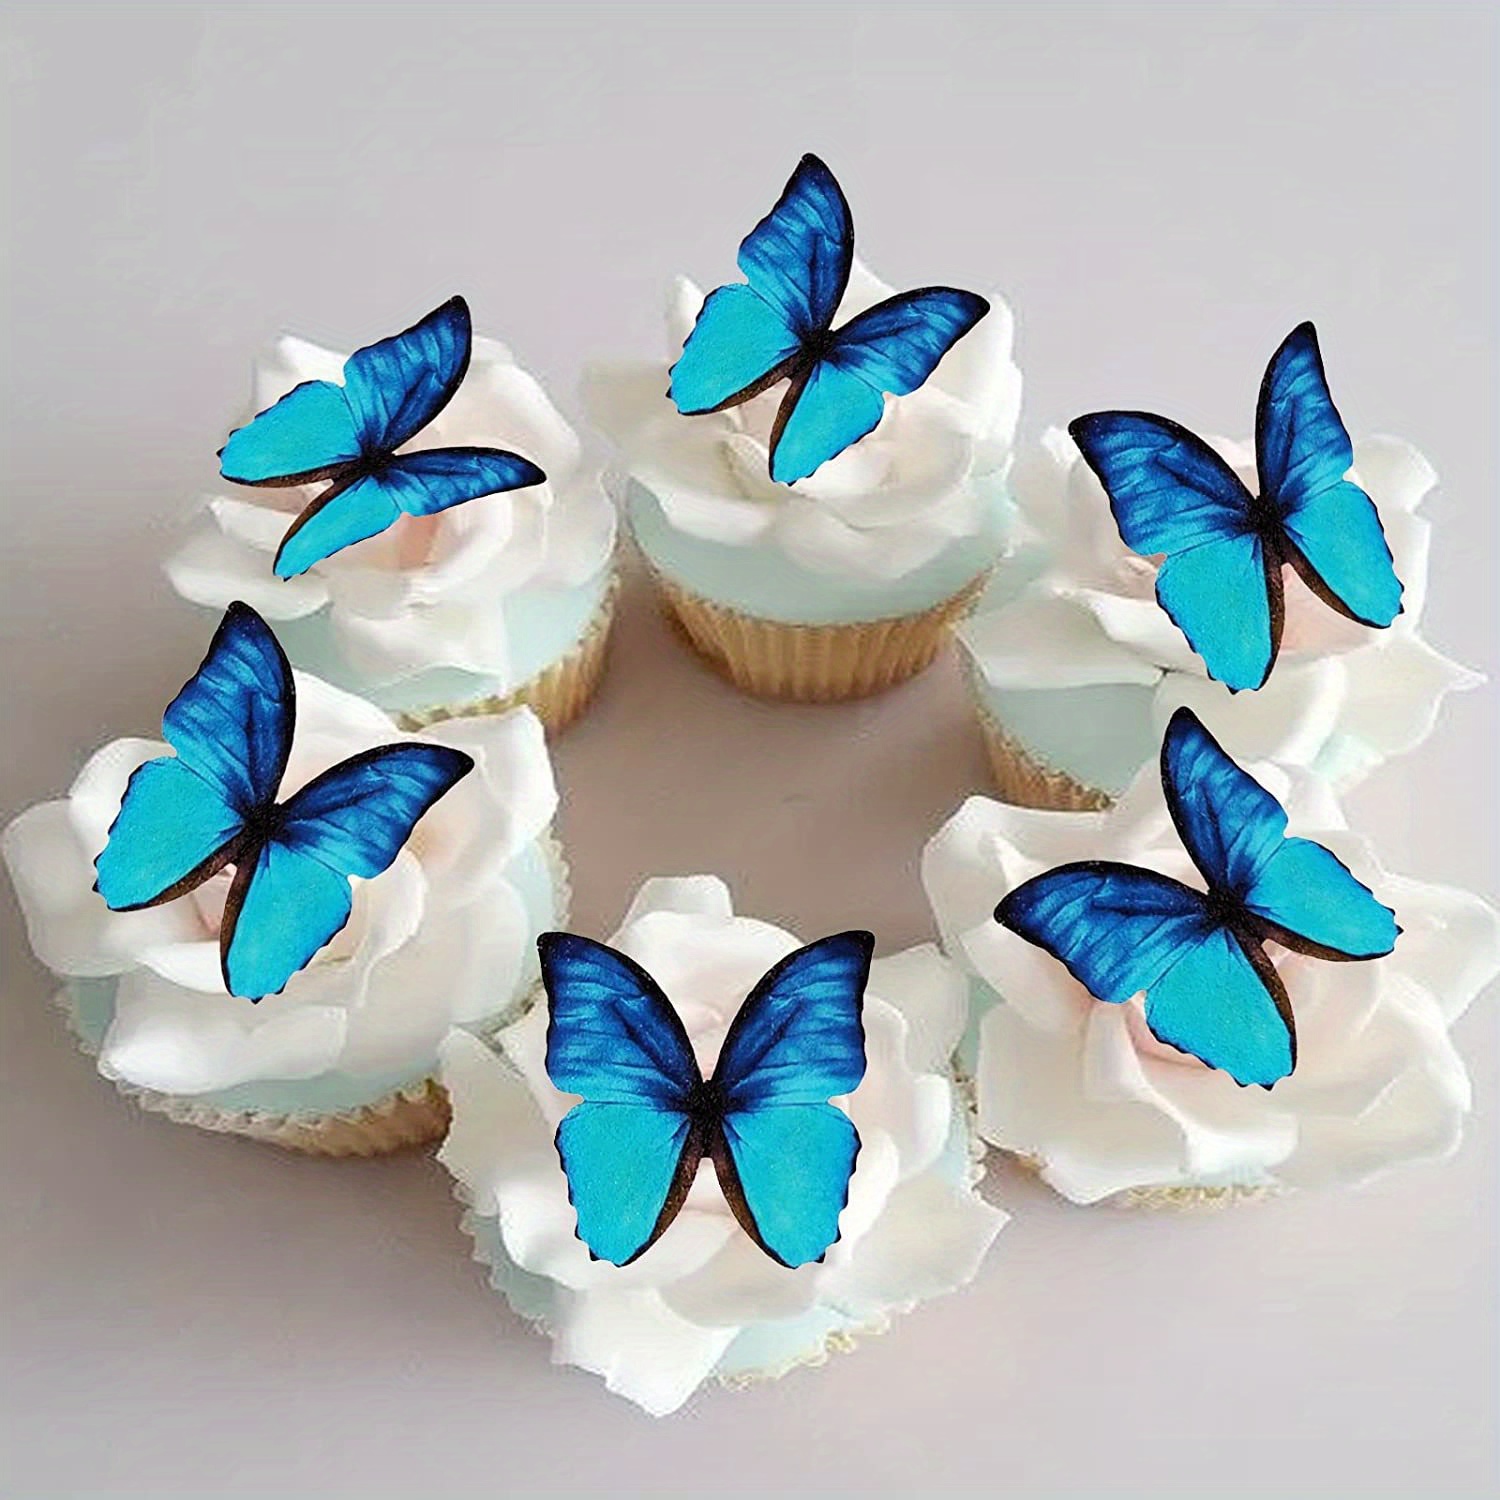 28 adornos comestibles para pasteles o cupcakes de mariposas arcoíris.  Mariposas de papel de oblea de 1.5. Decoración de cumpleaños de jardín  encantado. -  México